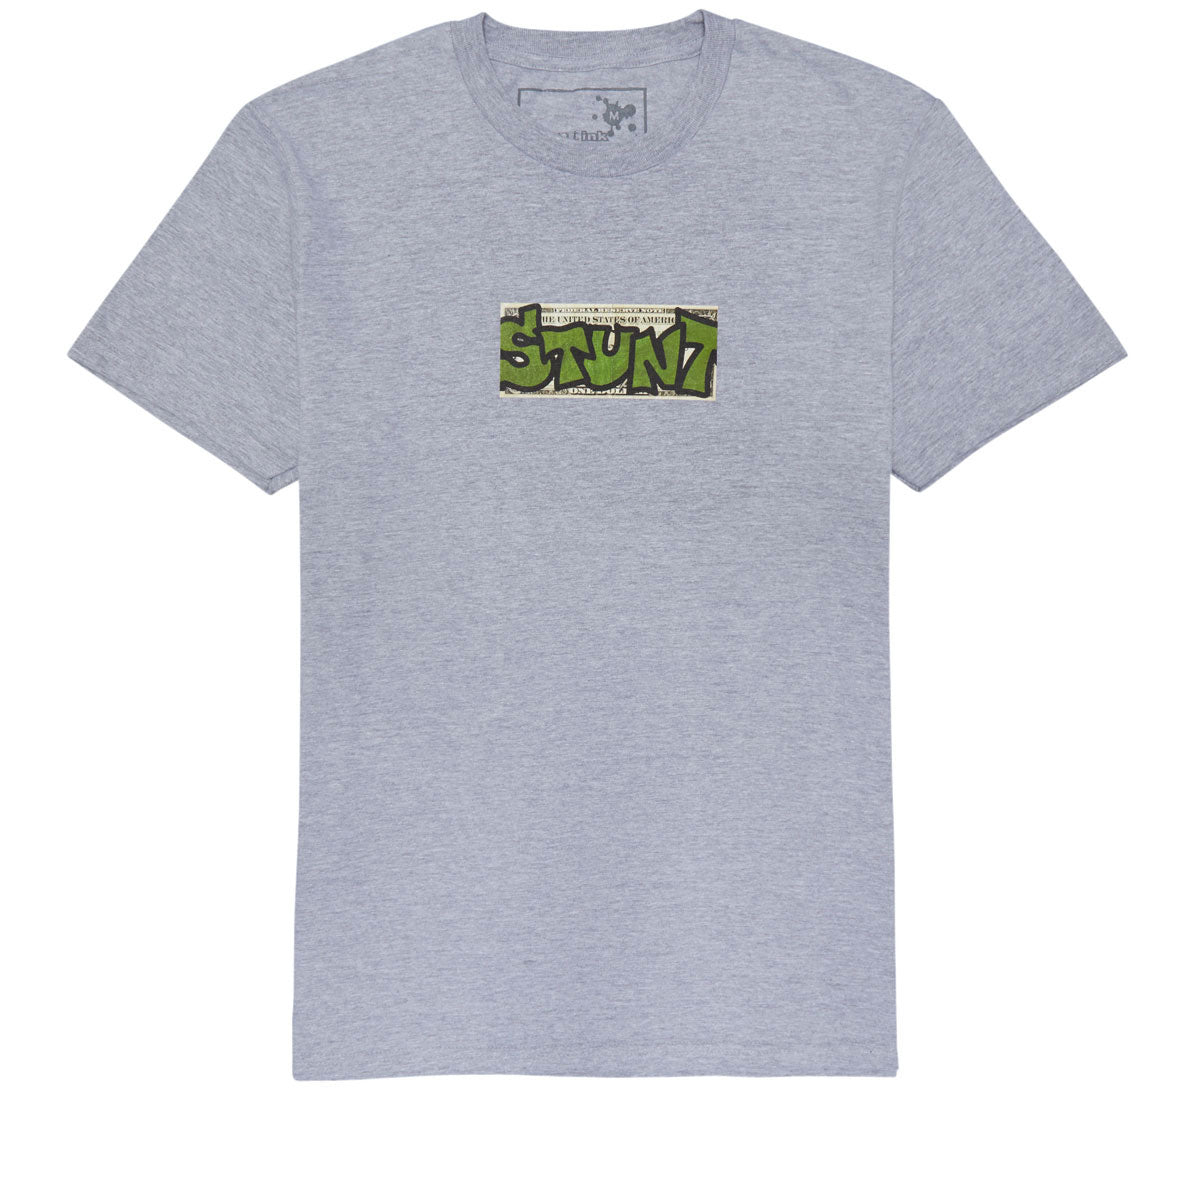 Stunt Buck T-Shirt - Grey image 1